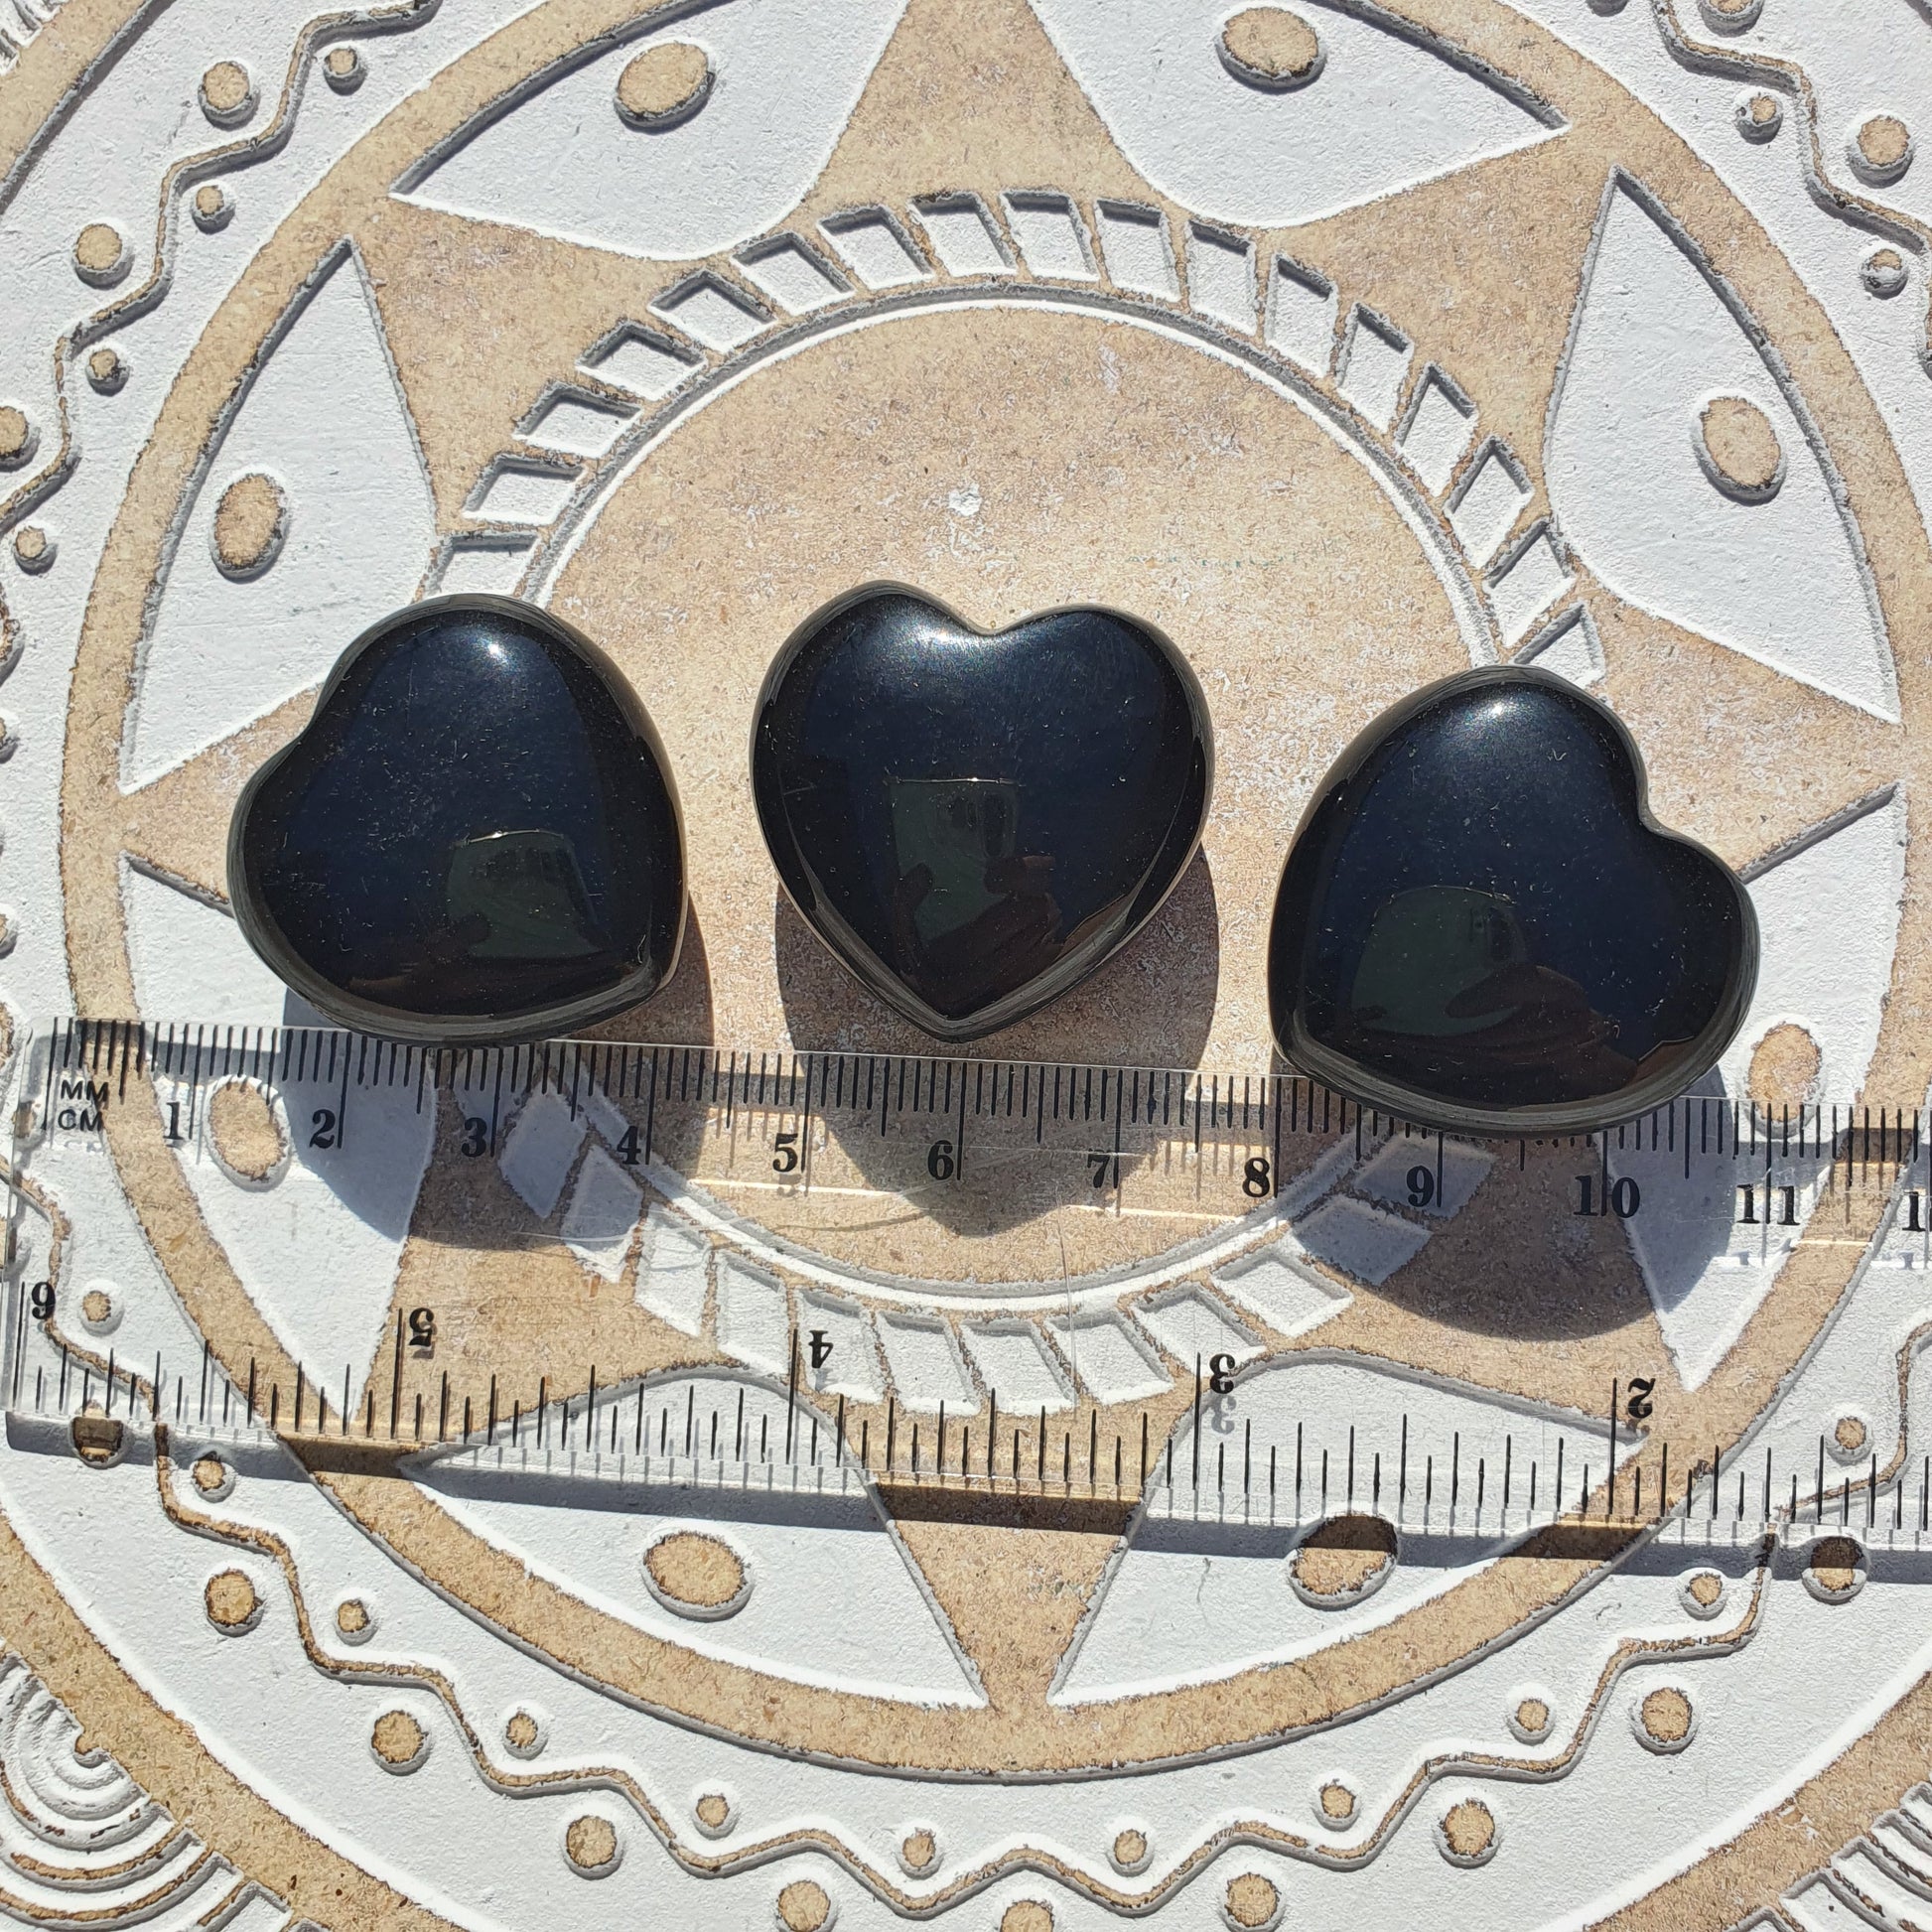 BLACK OBSIDIAN PROTECTION/HEALING | obsidian heart | obsidian crystal